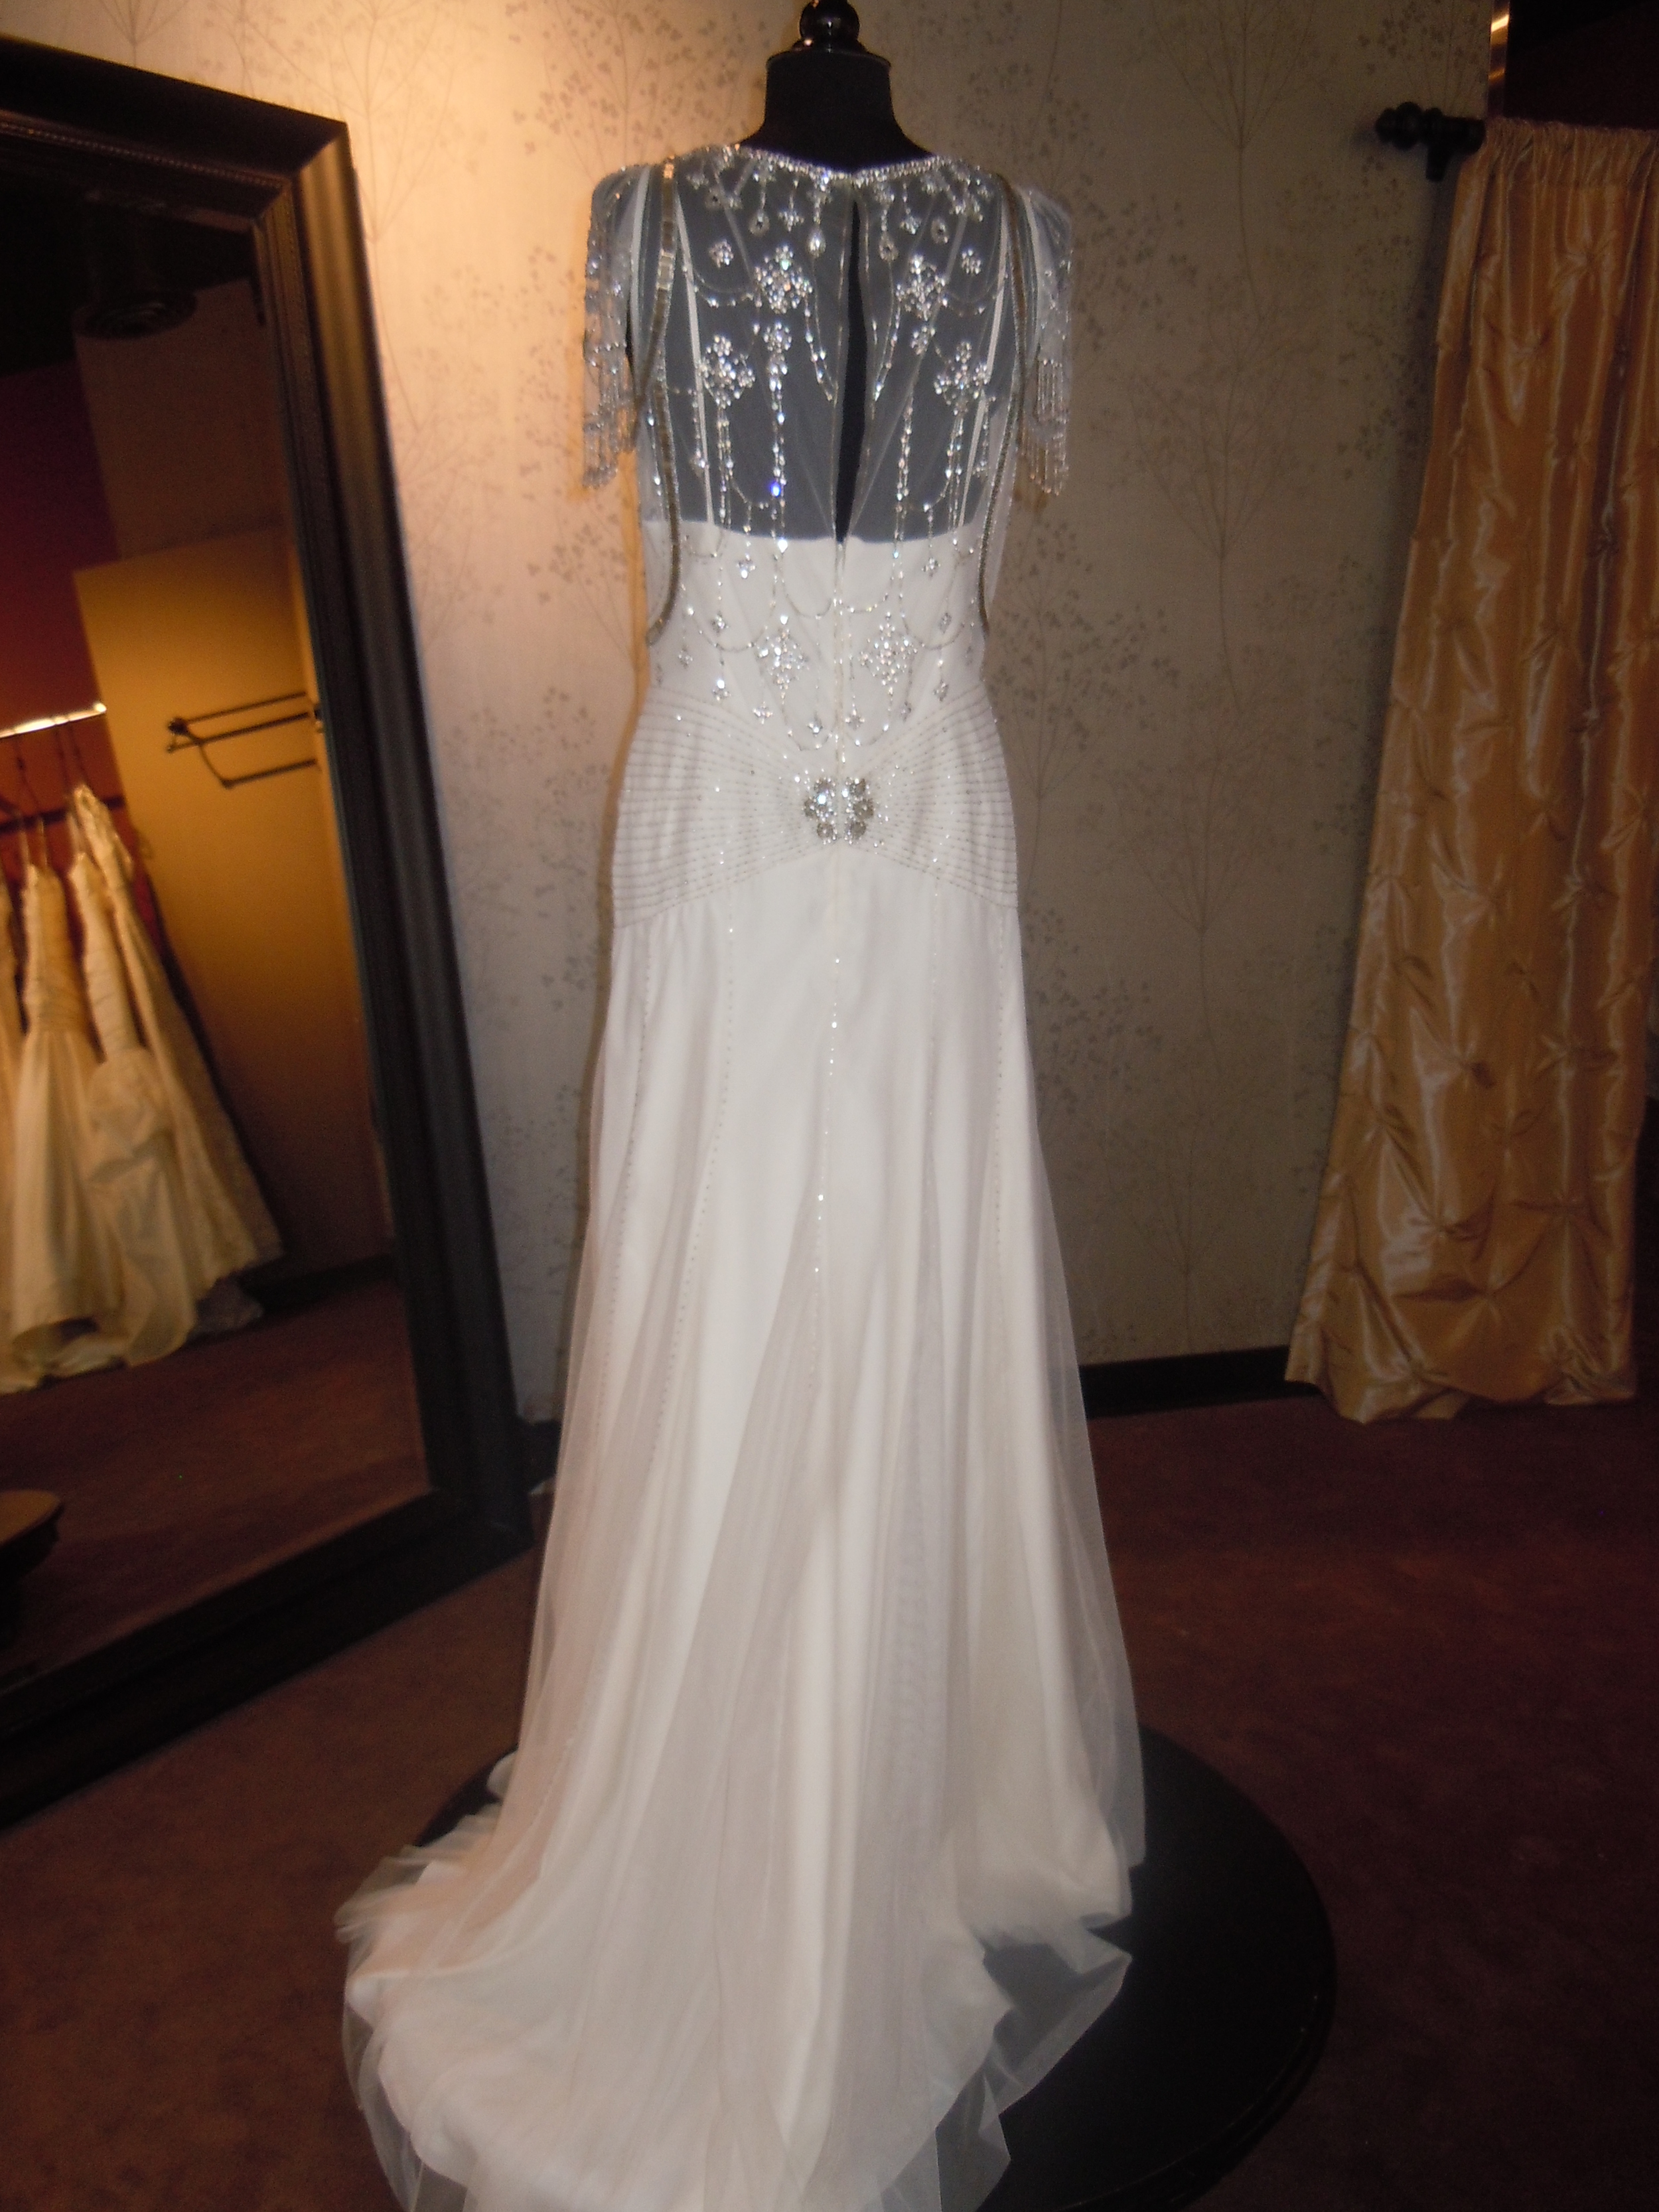 Jenny Packham "Damask" bridal gown back